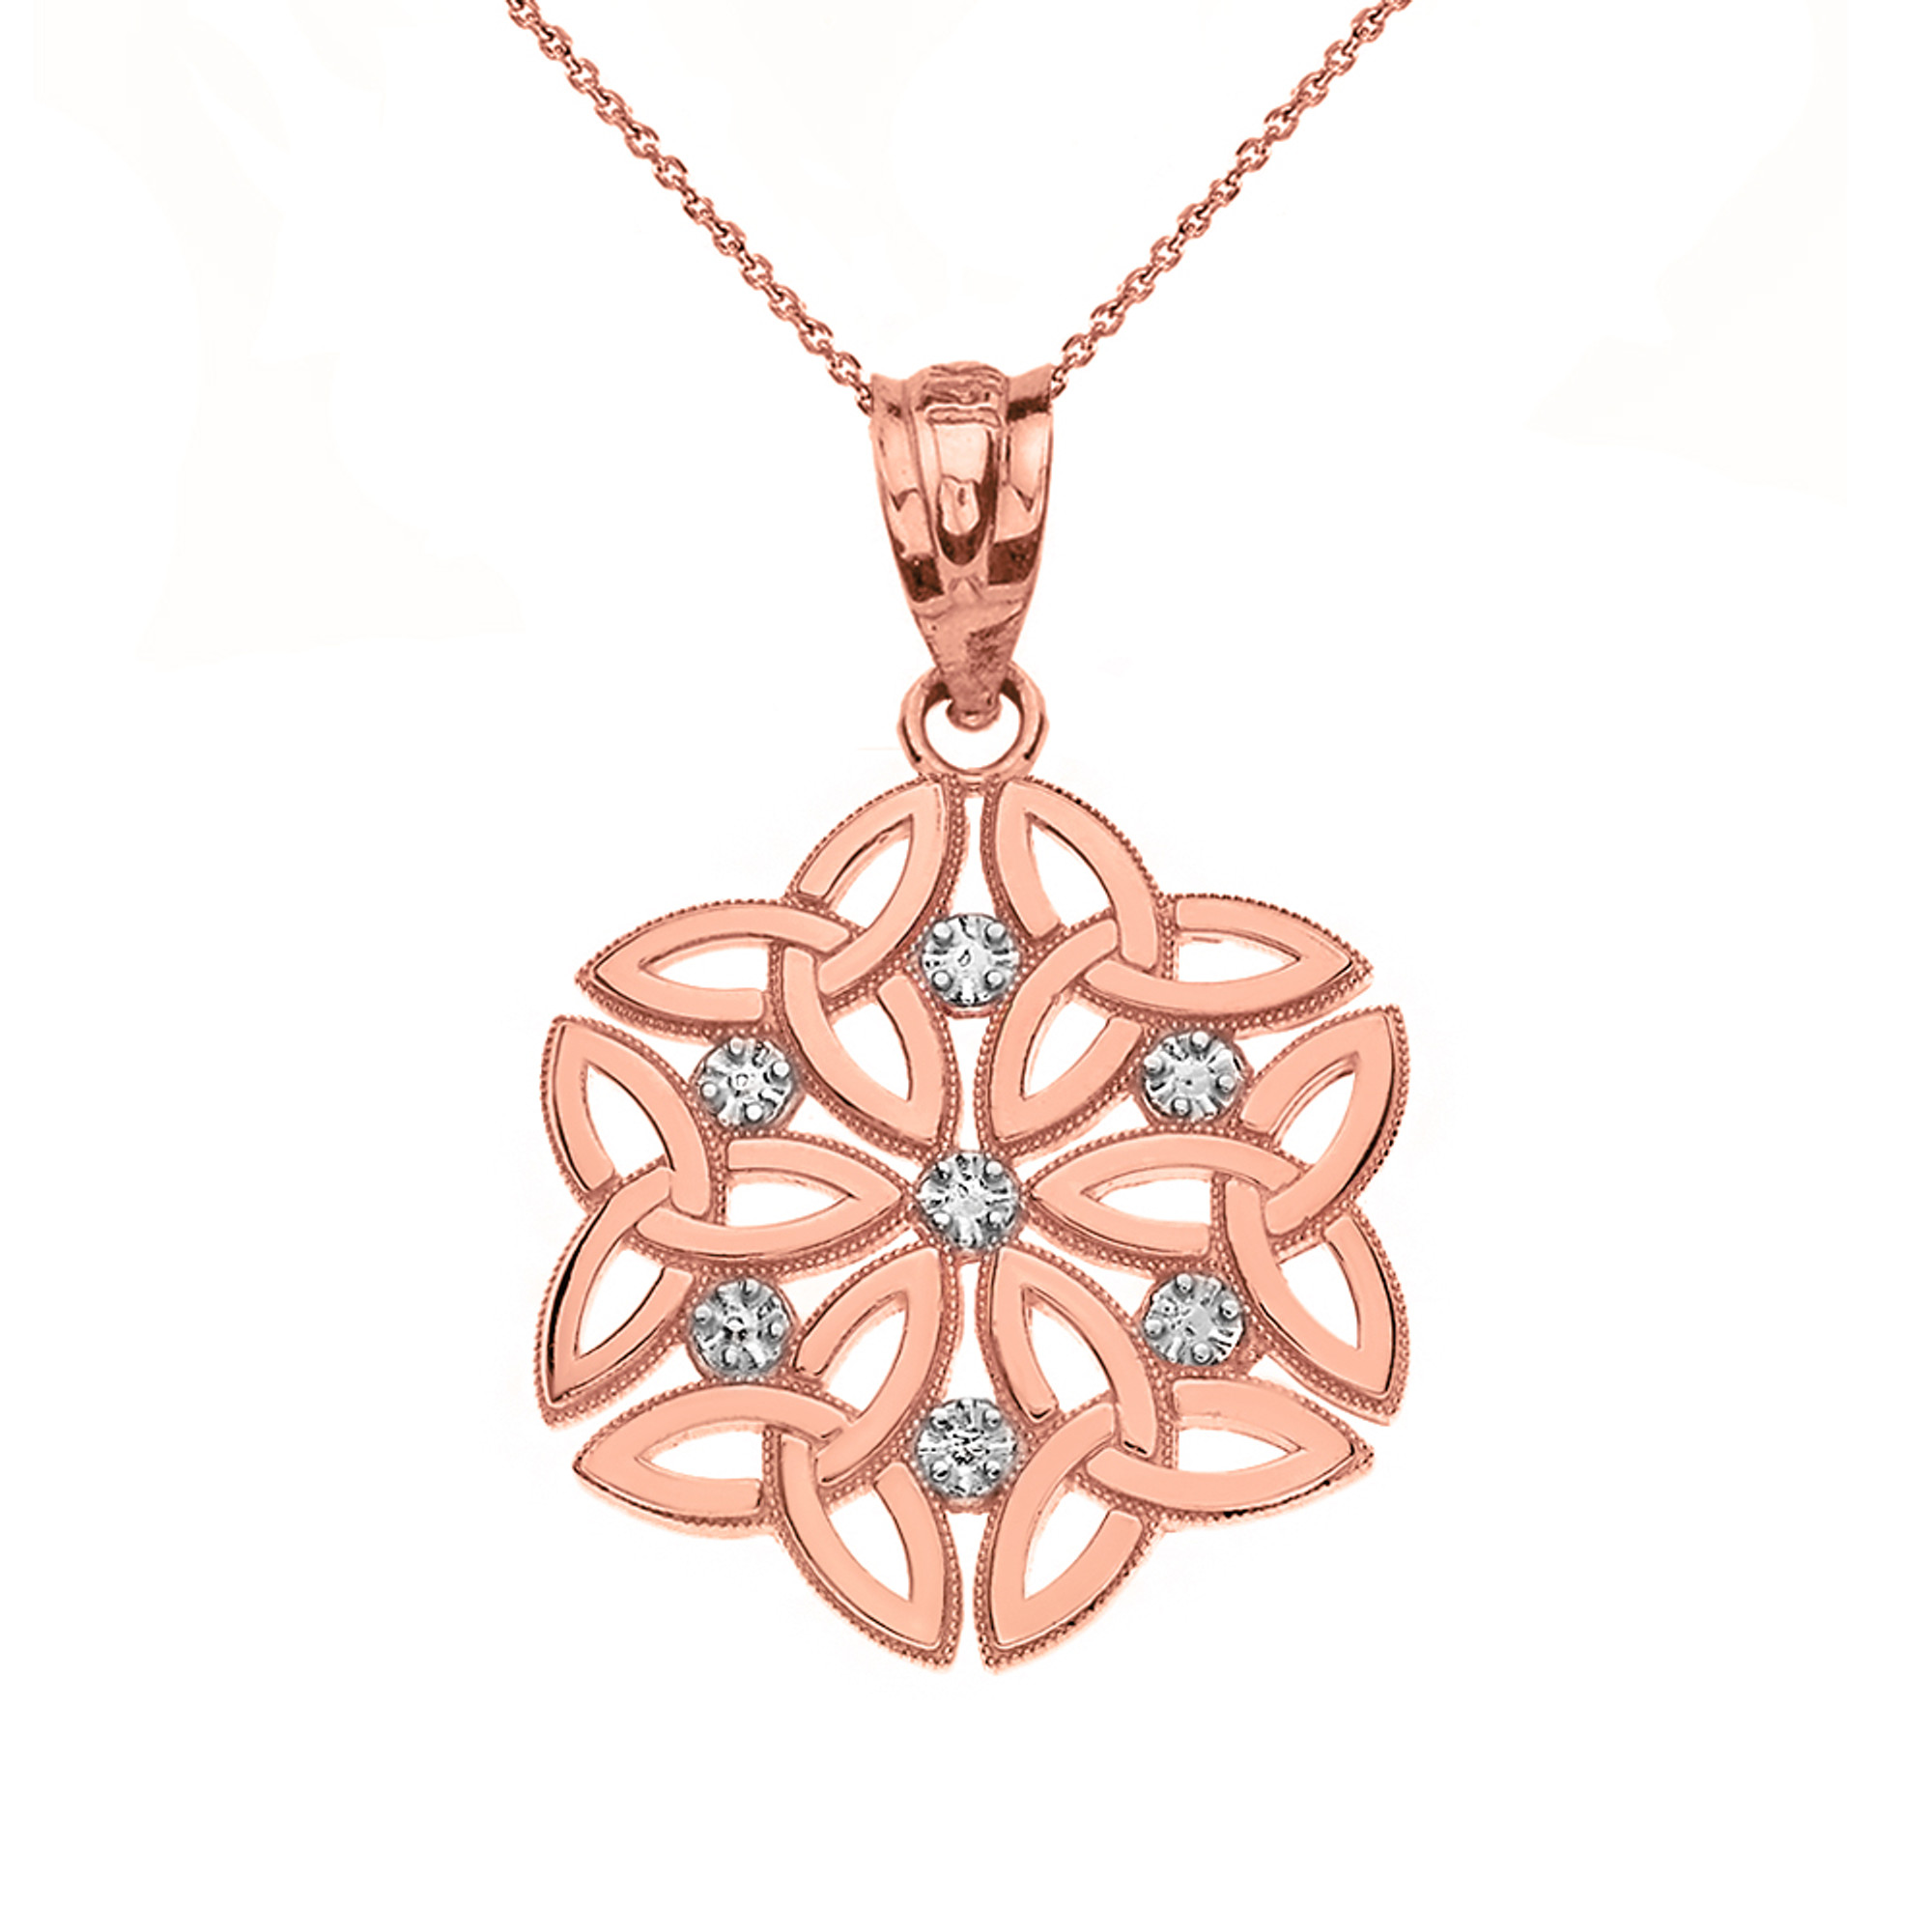 Celtic Dara Knot pendant necklace | Pirate jewelry